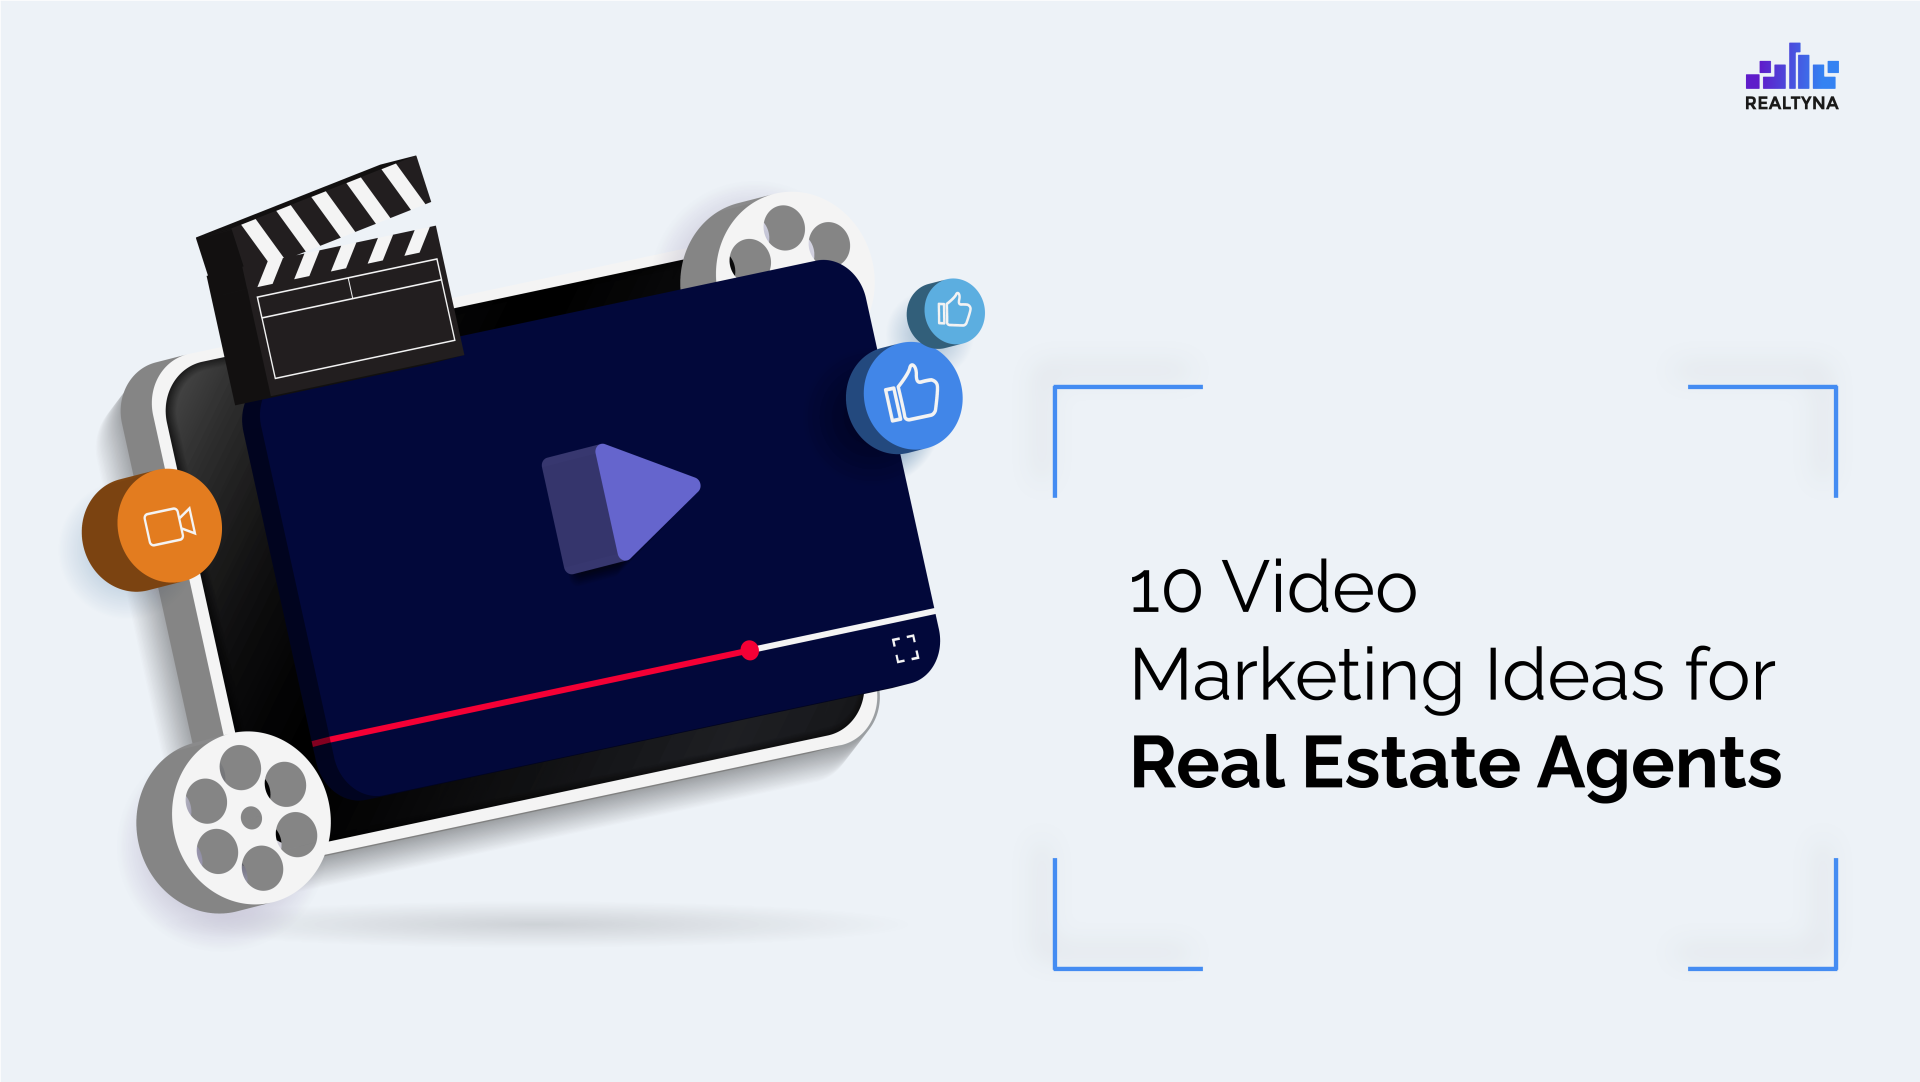 rna 10 video marketing ideas